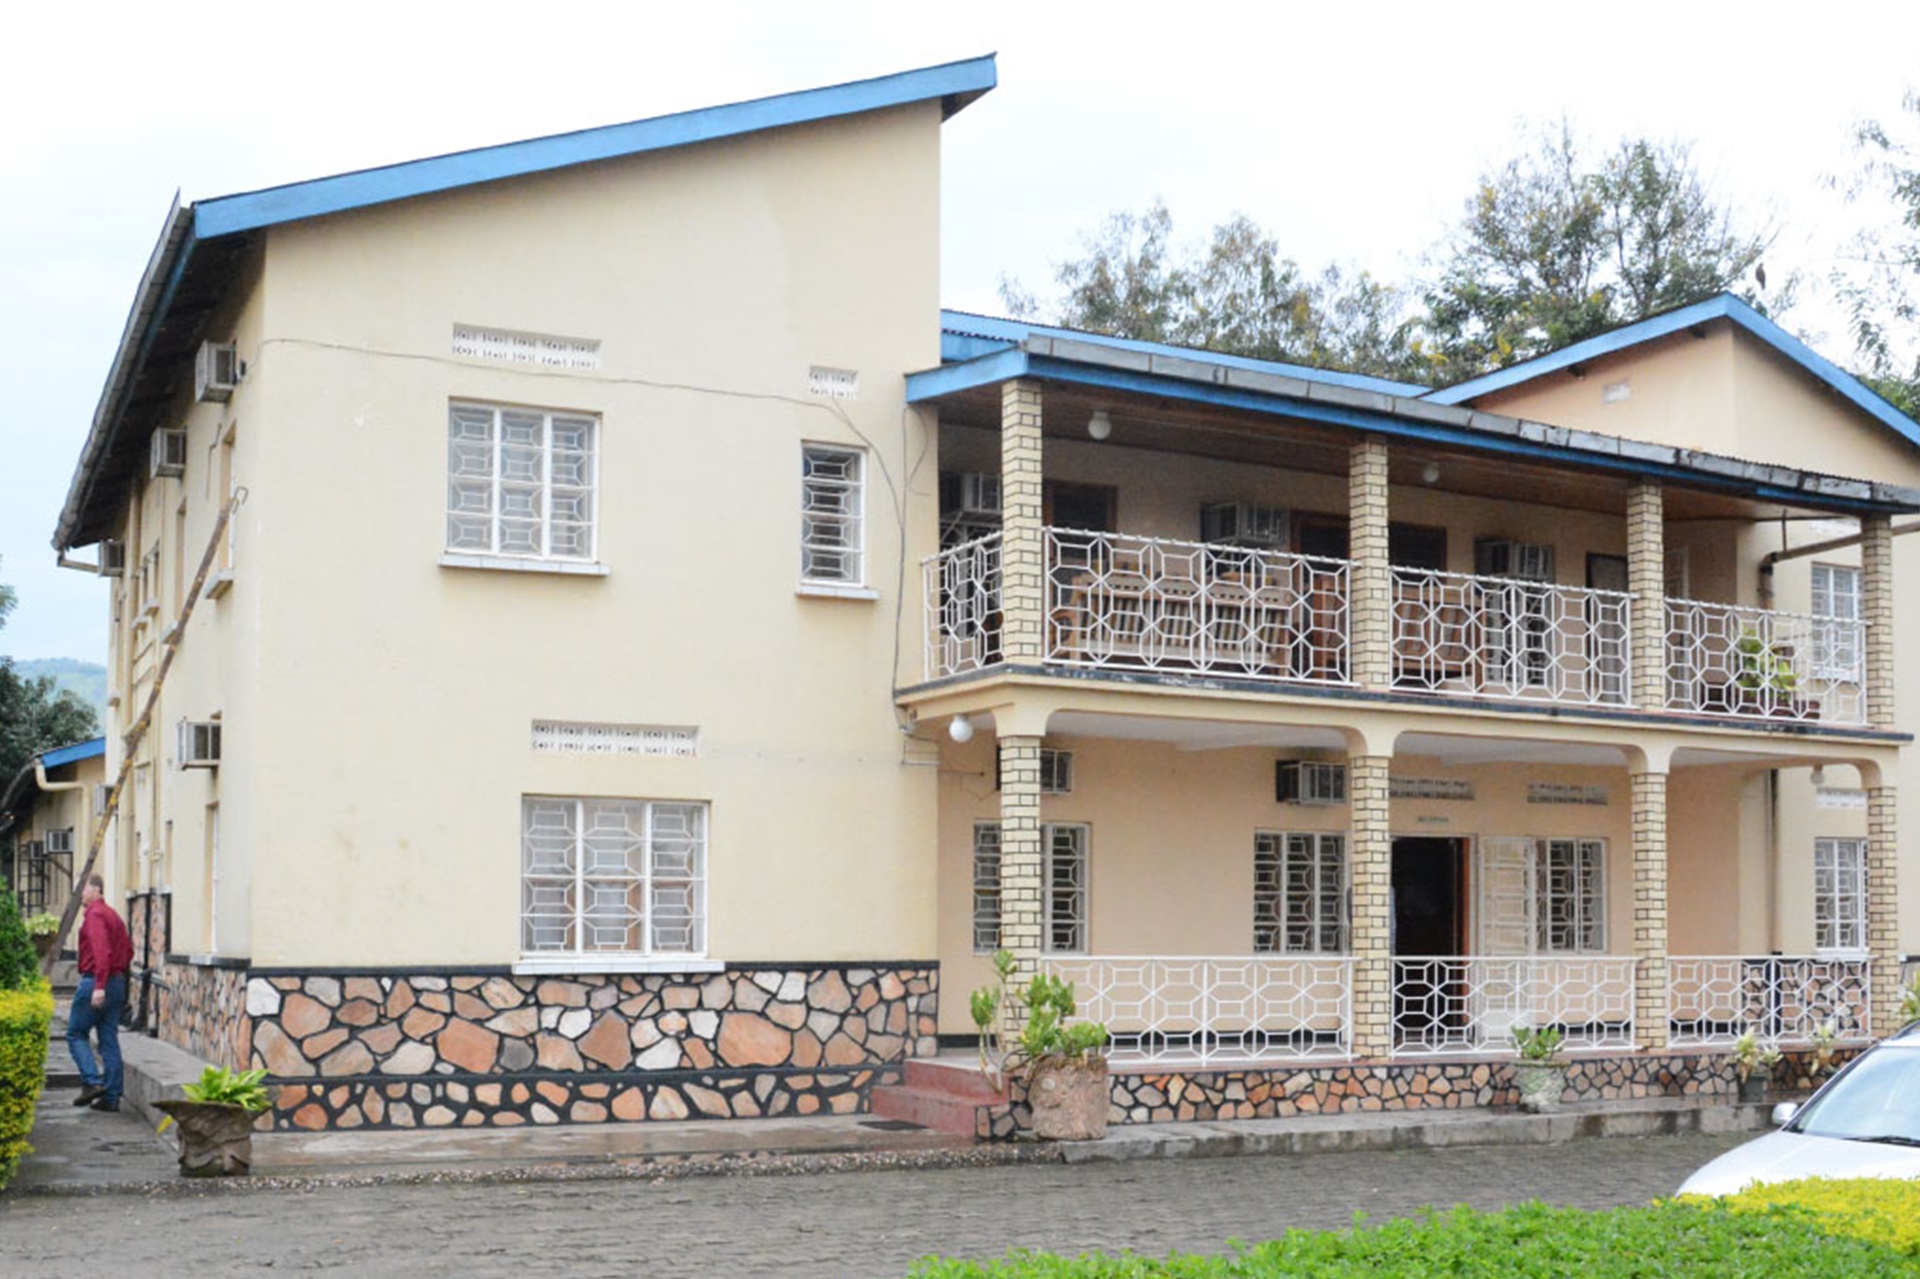 uganda hotels - Rwenzori International Hotel - Kasese Hotels - accommodation in kasese